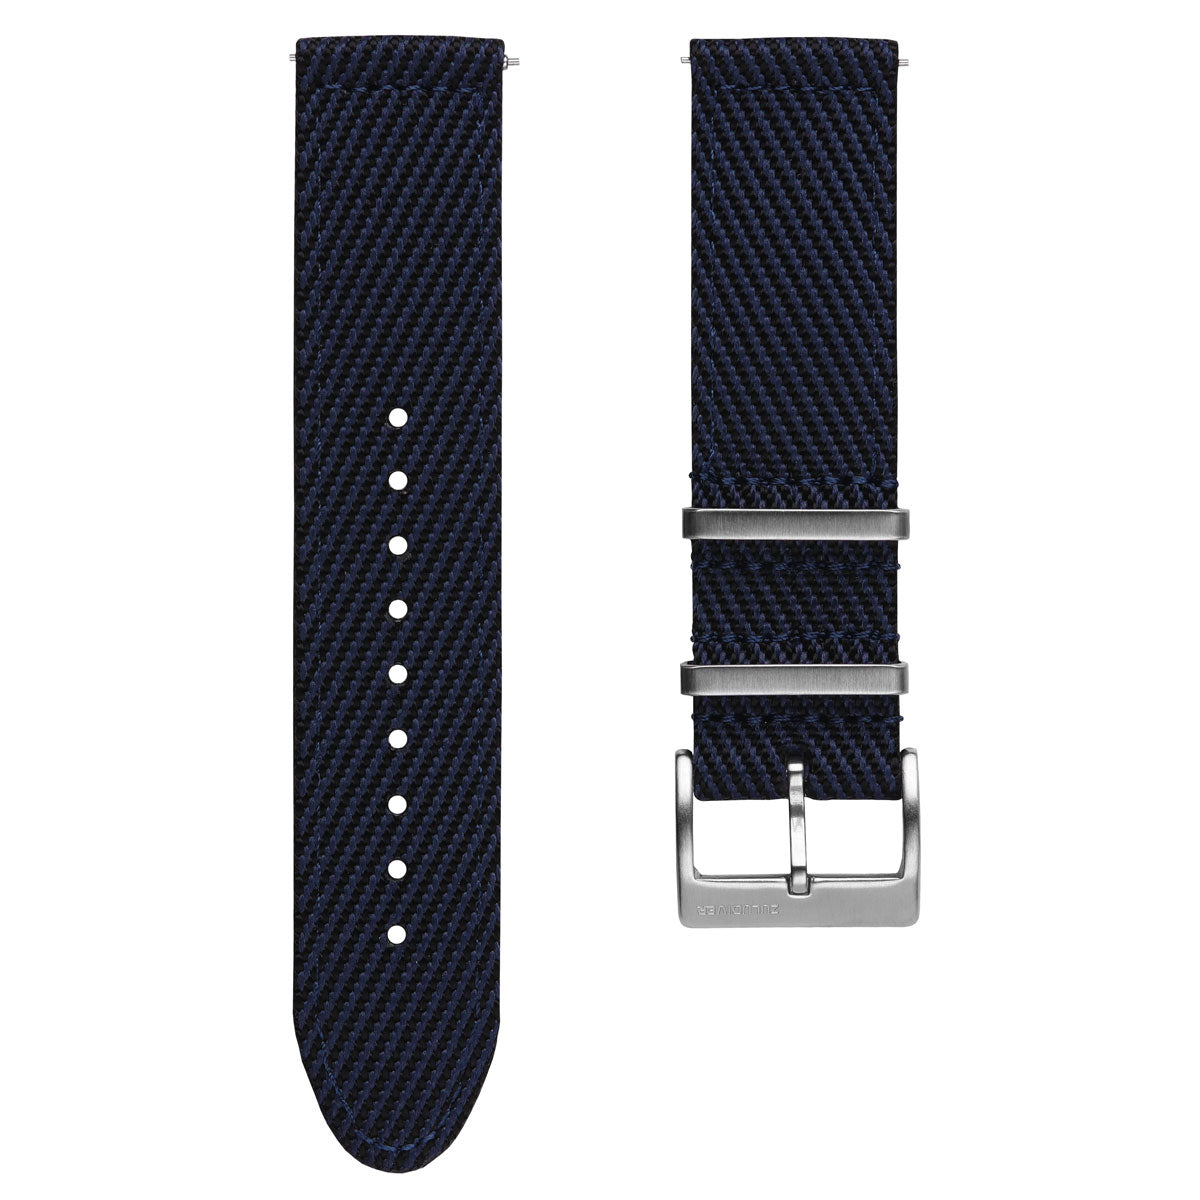 Seasalter Military Nylon Watch Strap - Black/Blue